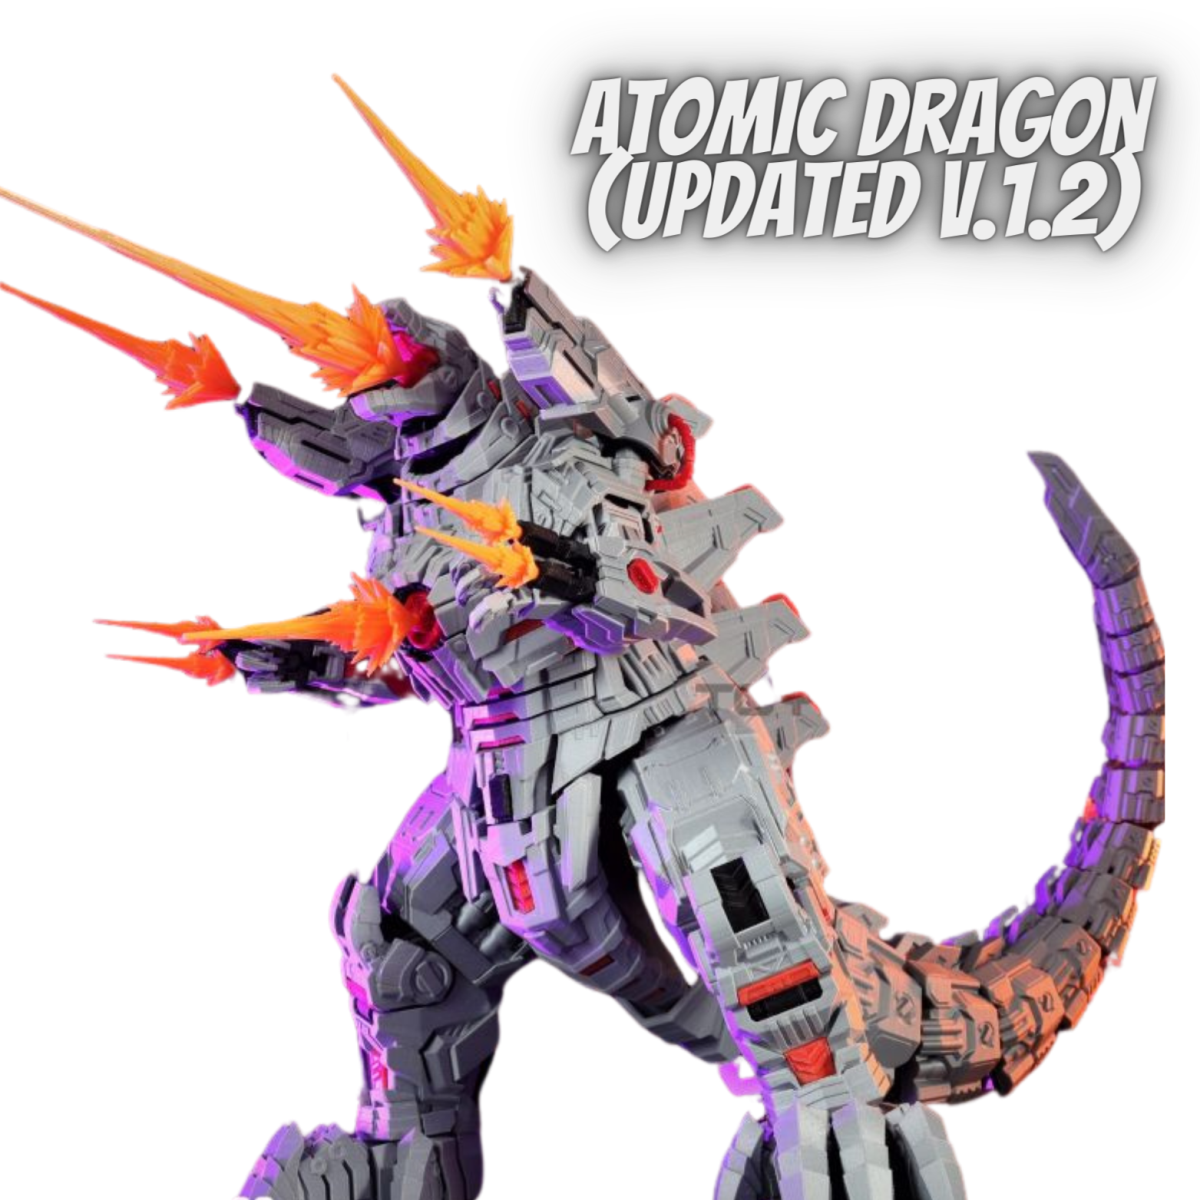 Atomic Dragon (Updated V.1.2)